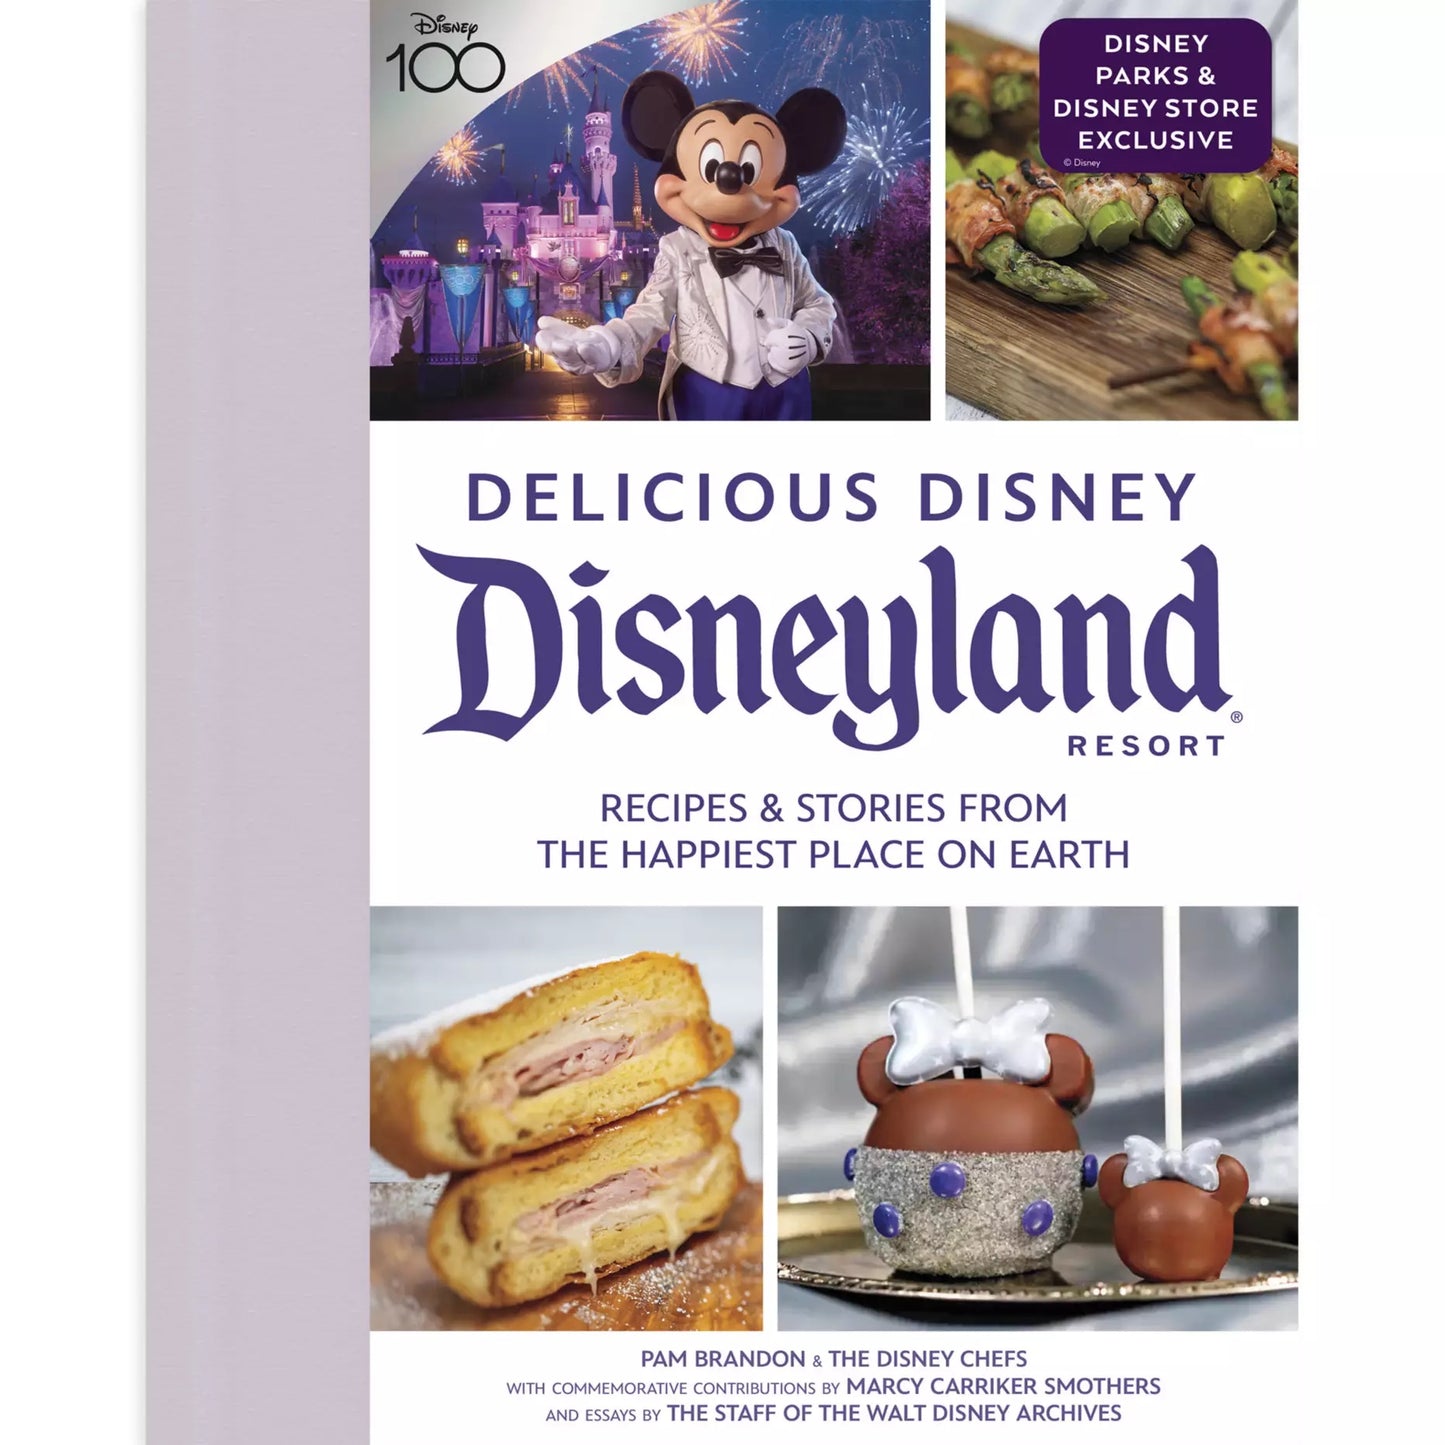 Disney100 Delicious Disney – Disneyland Recipes and Stories